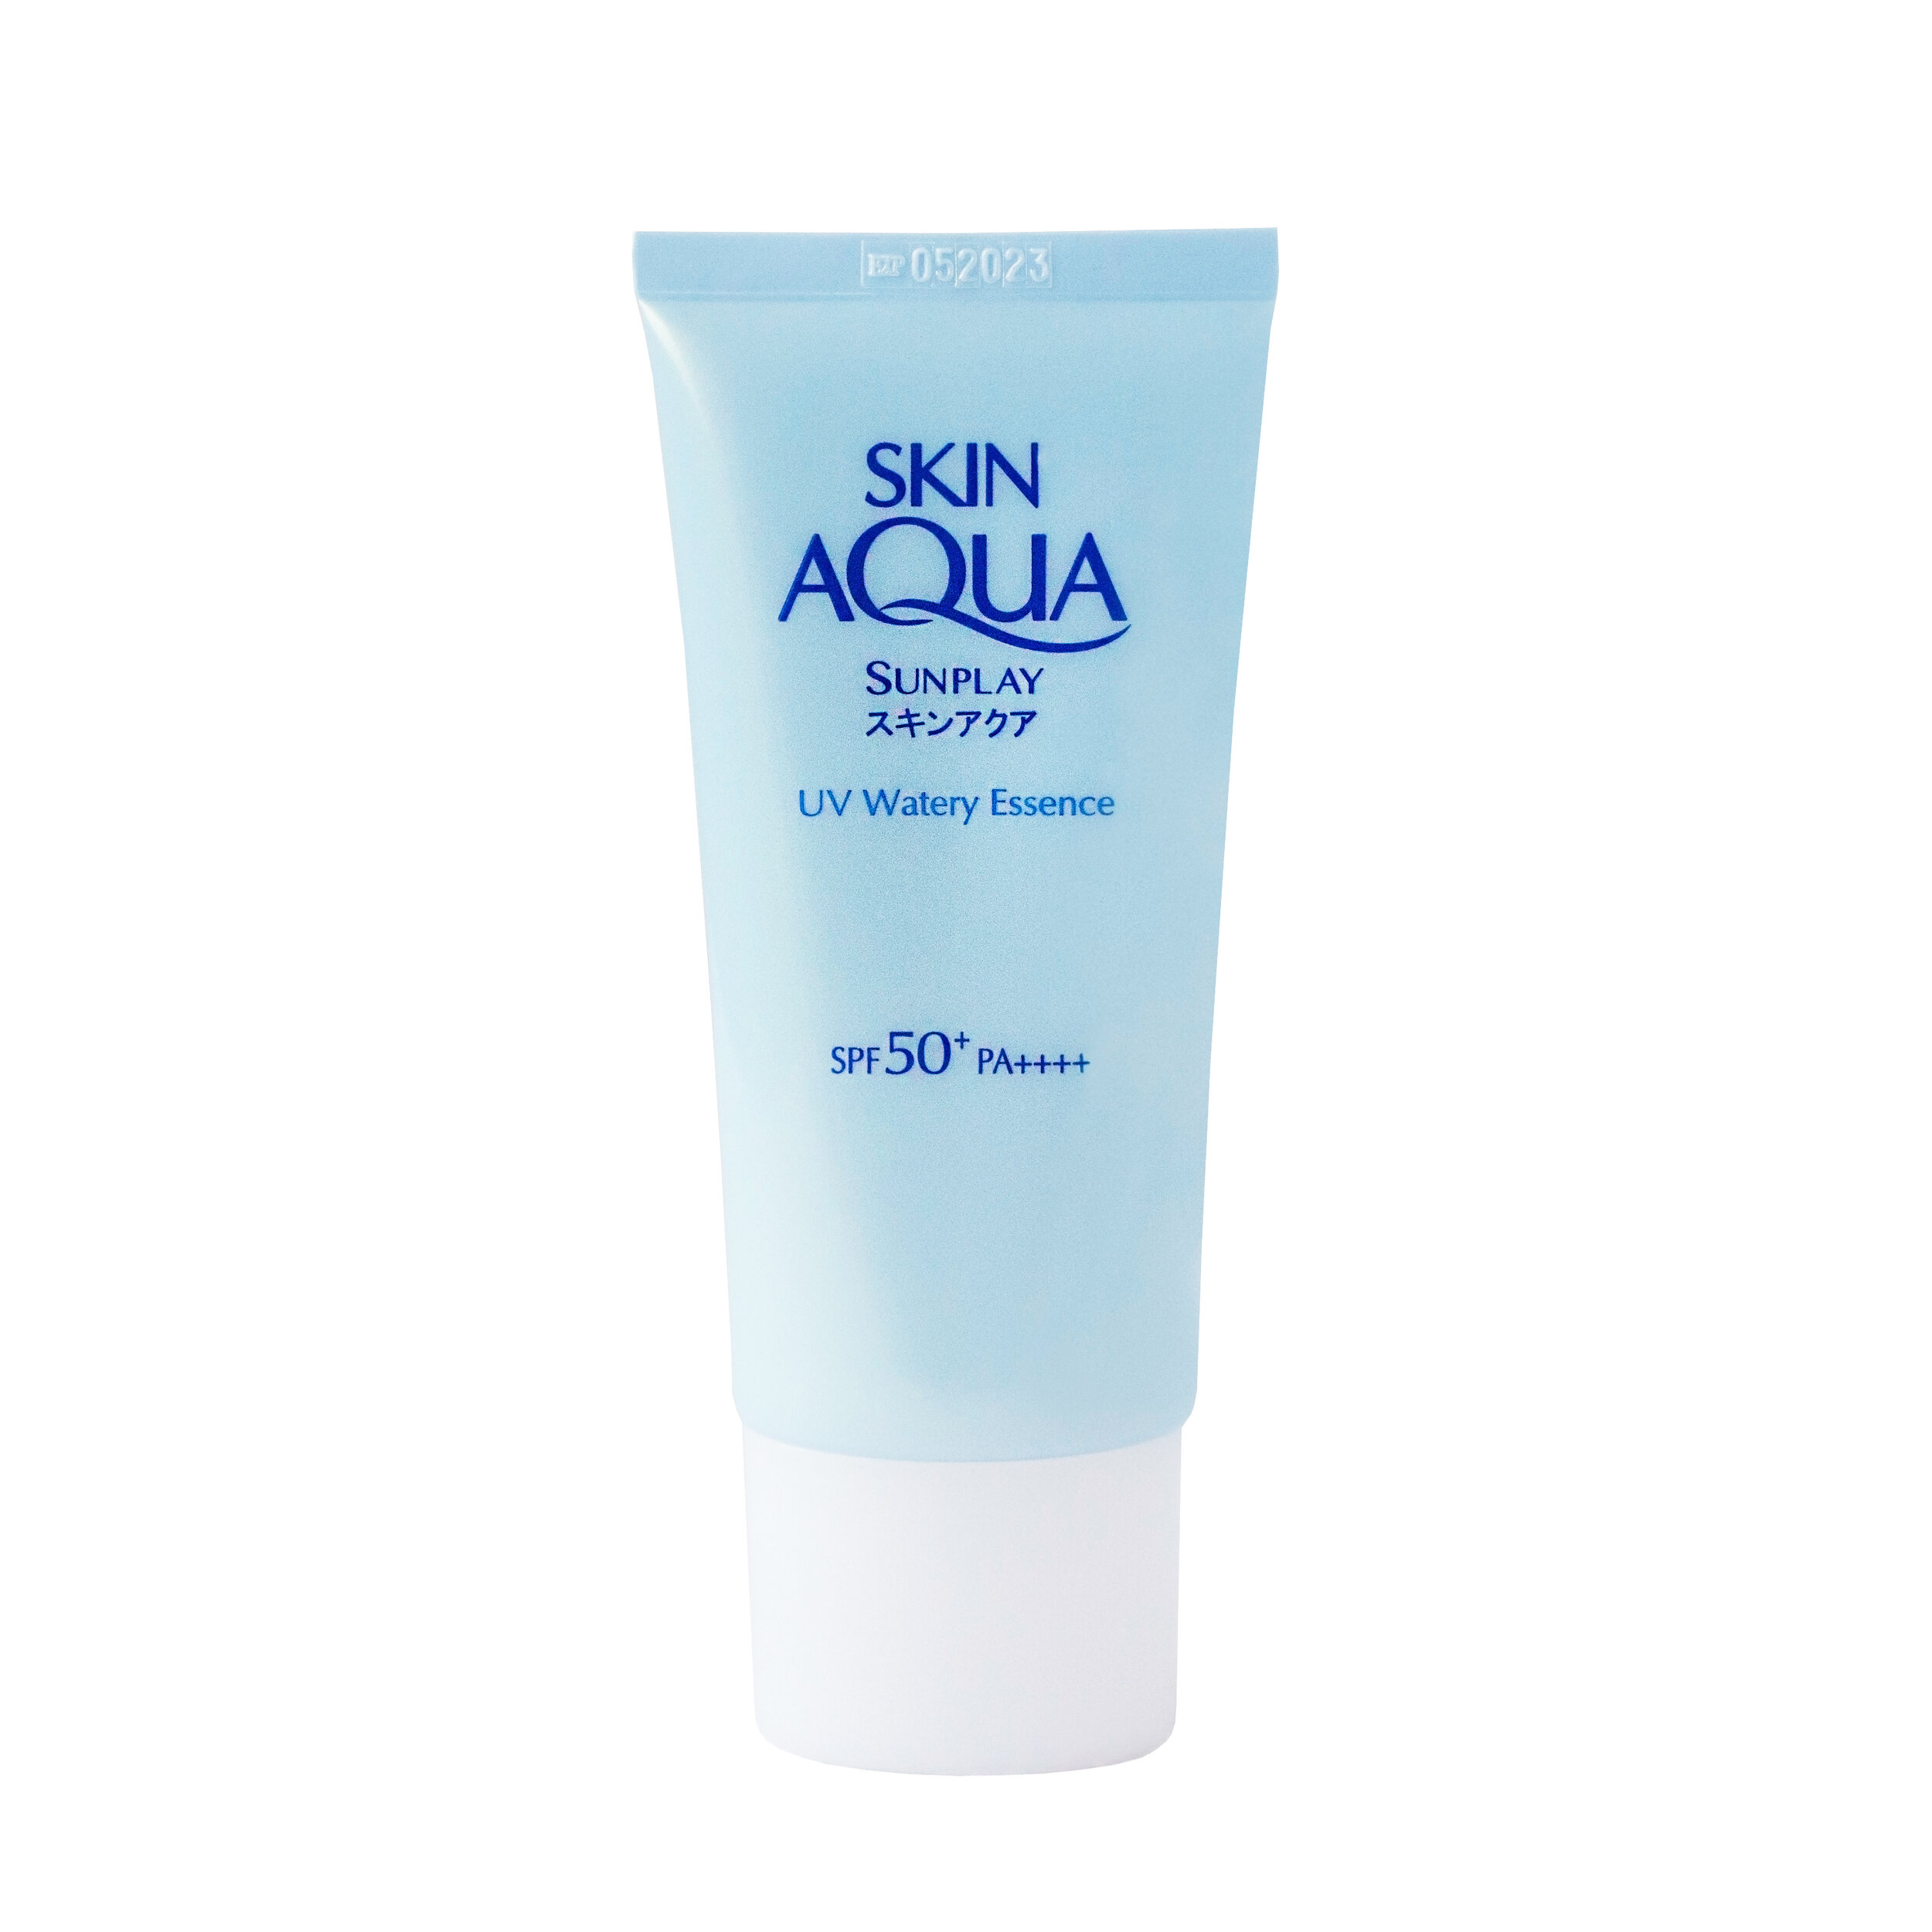 Sunplay SkinAqua UV Watery Essence.jpg